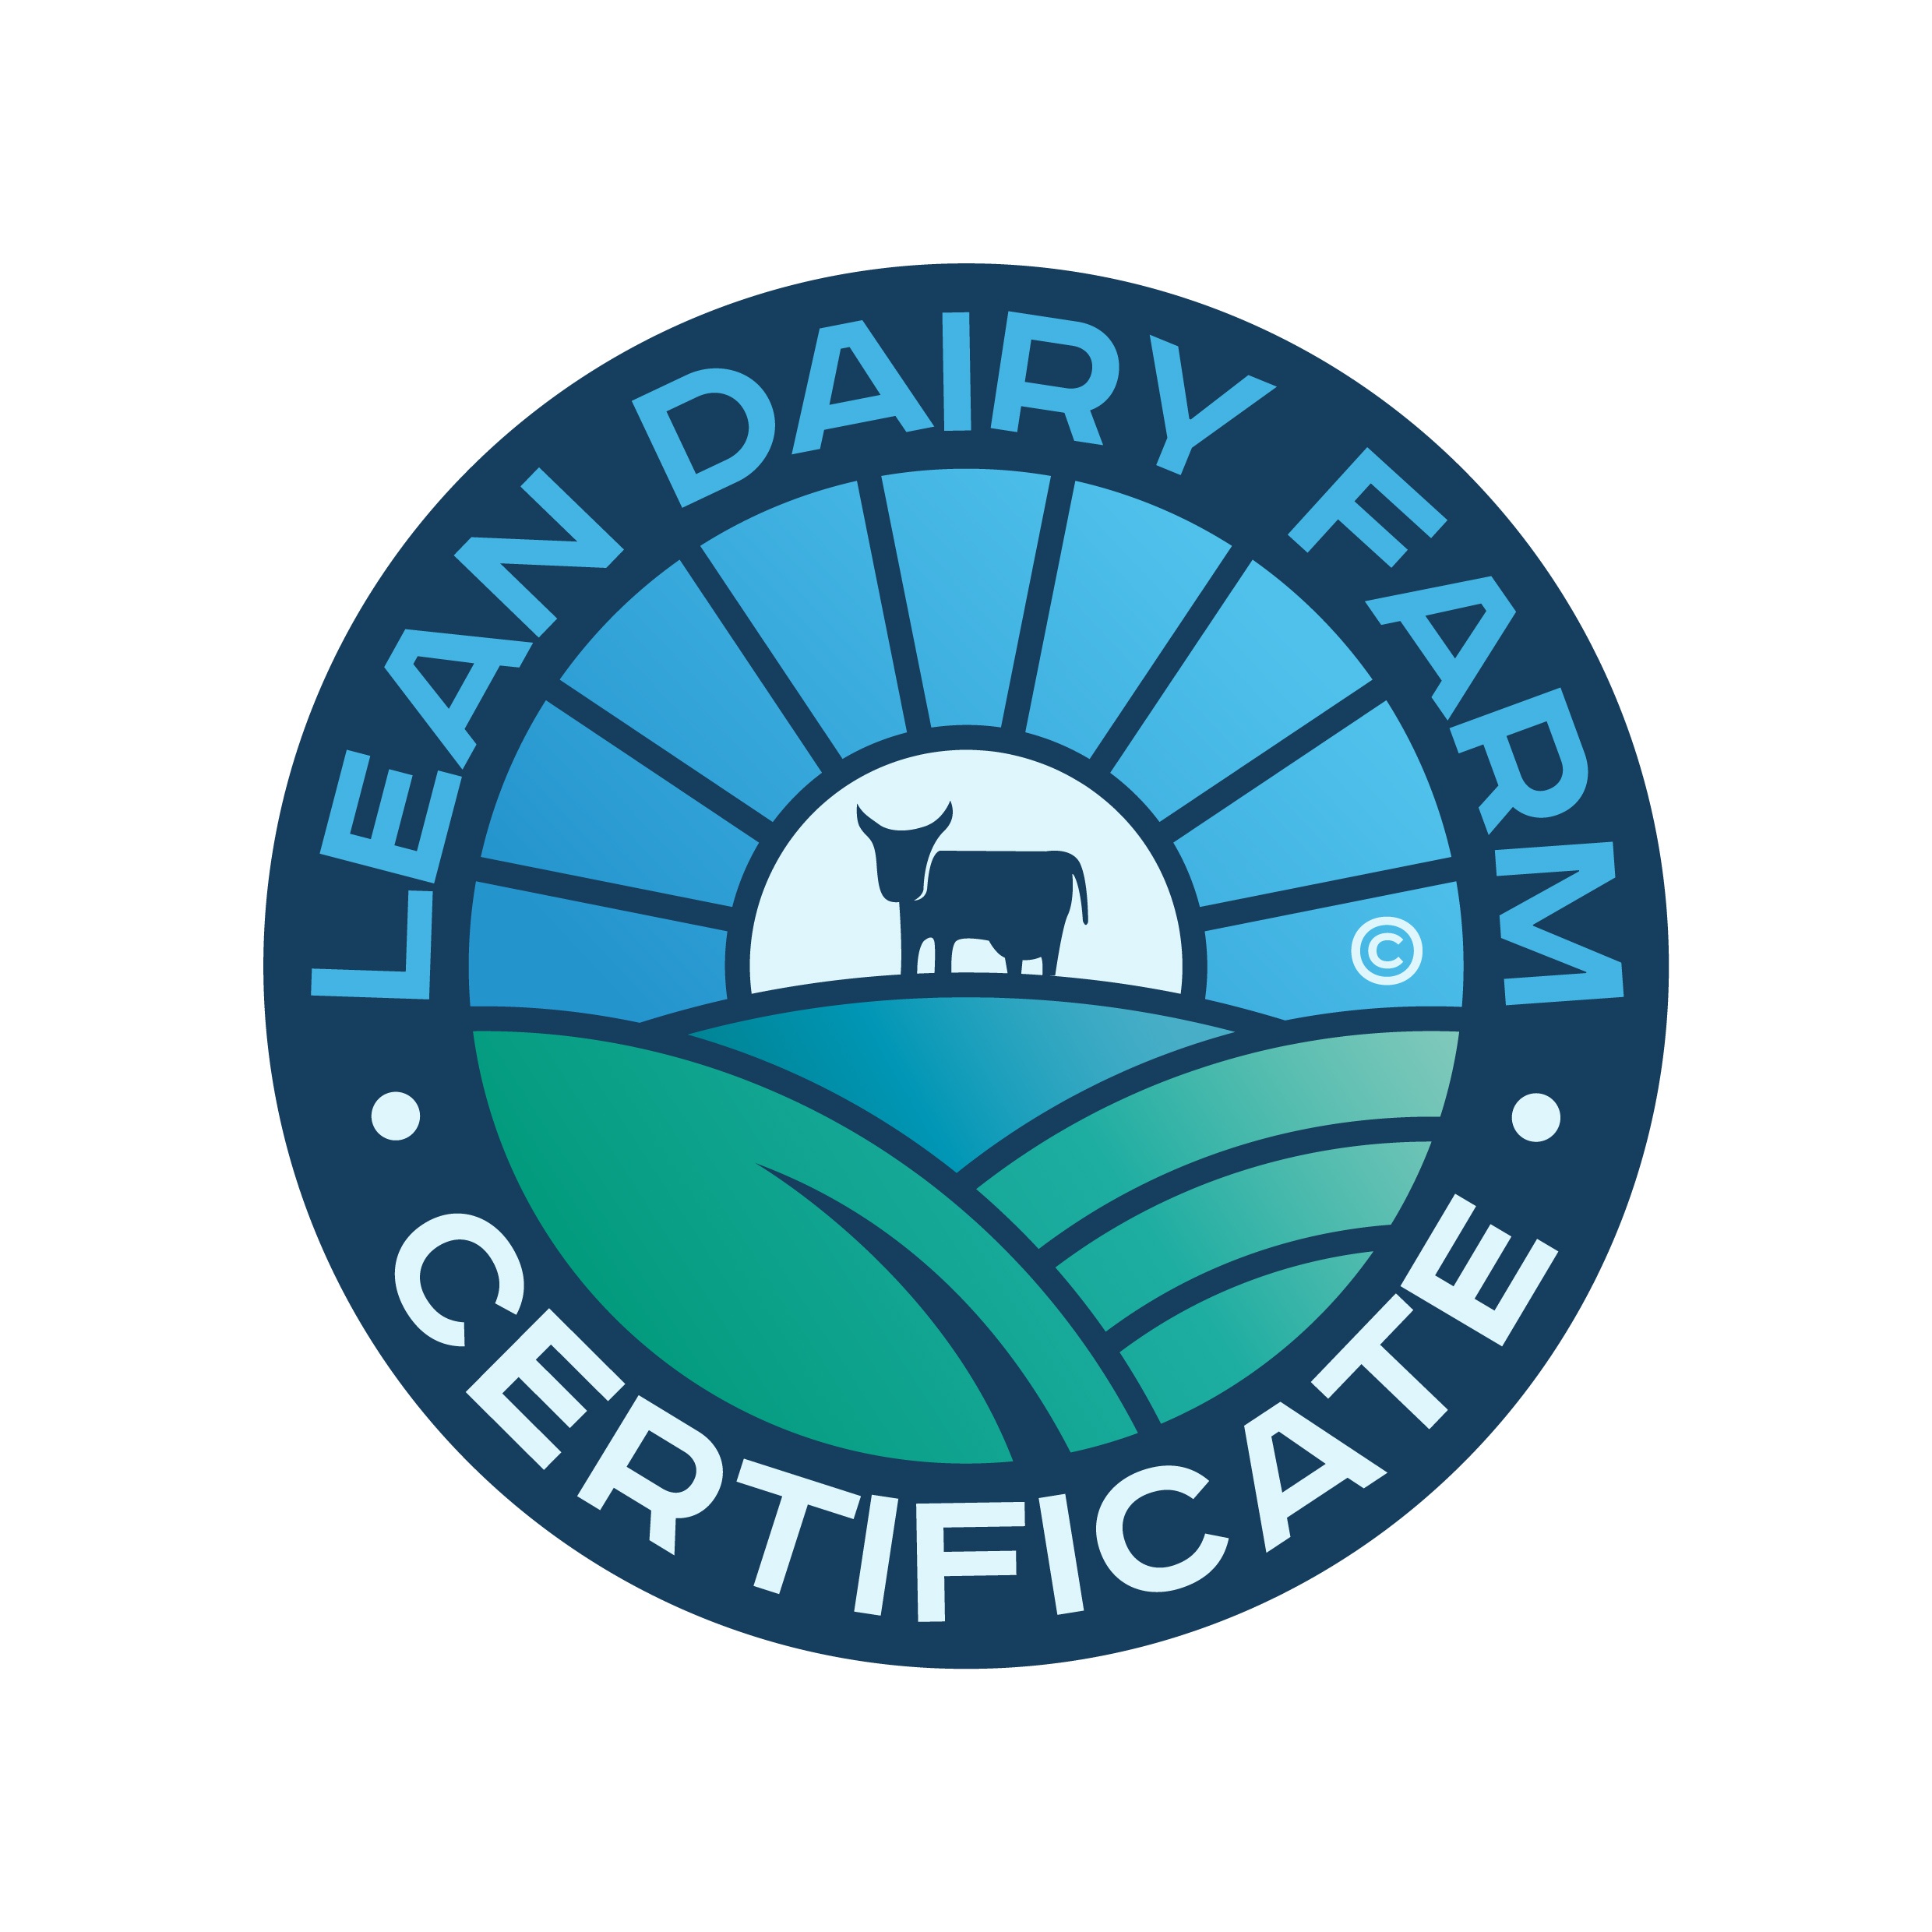 Lean Dairy Farm Certificate.jpg